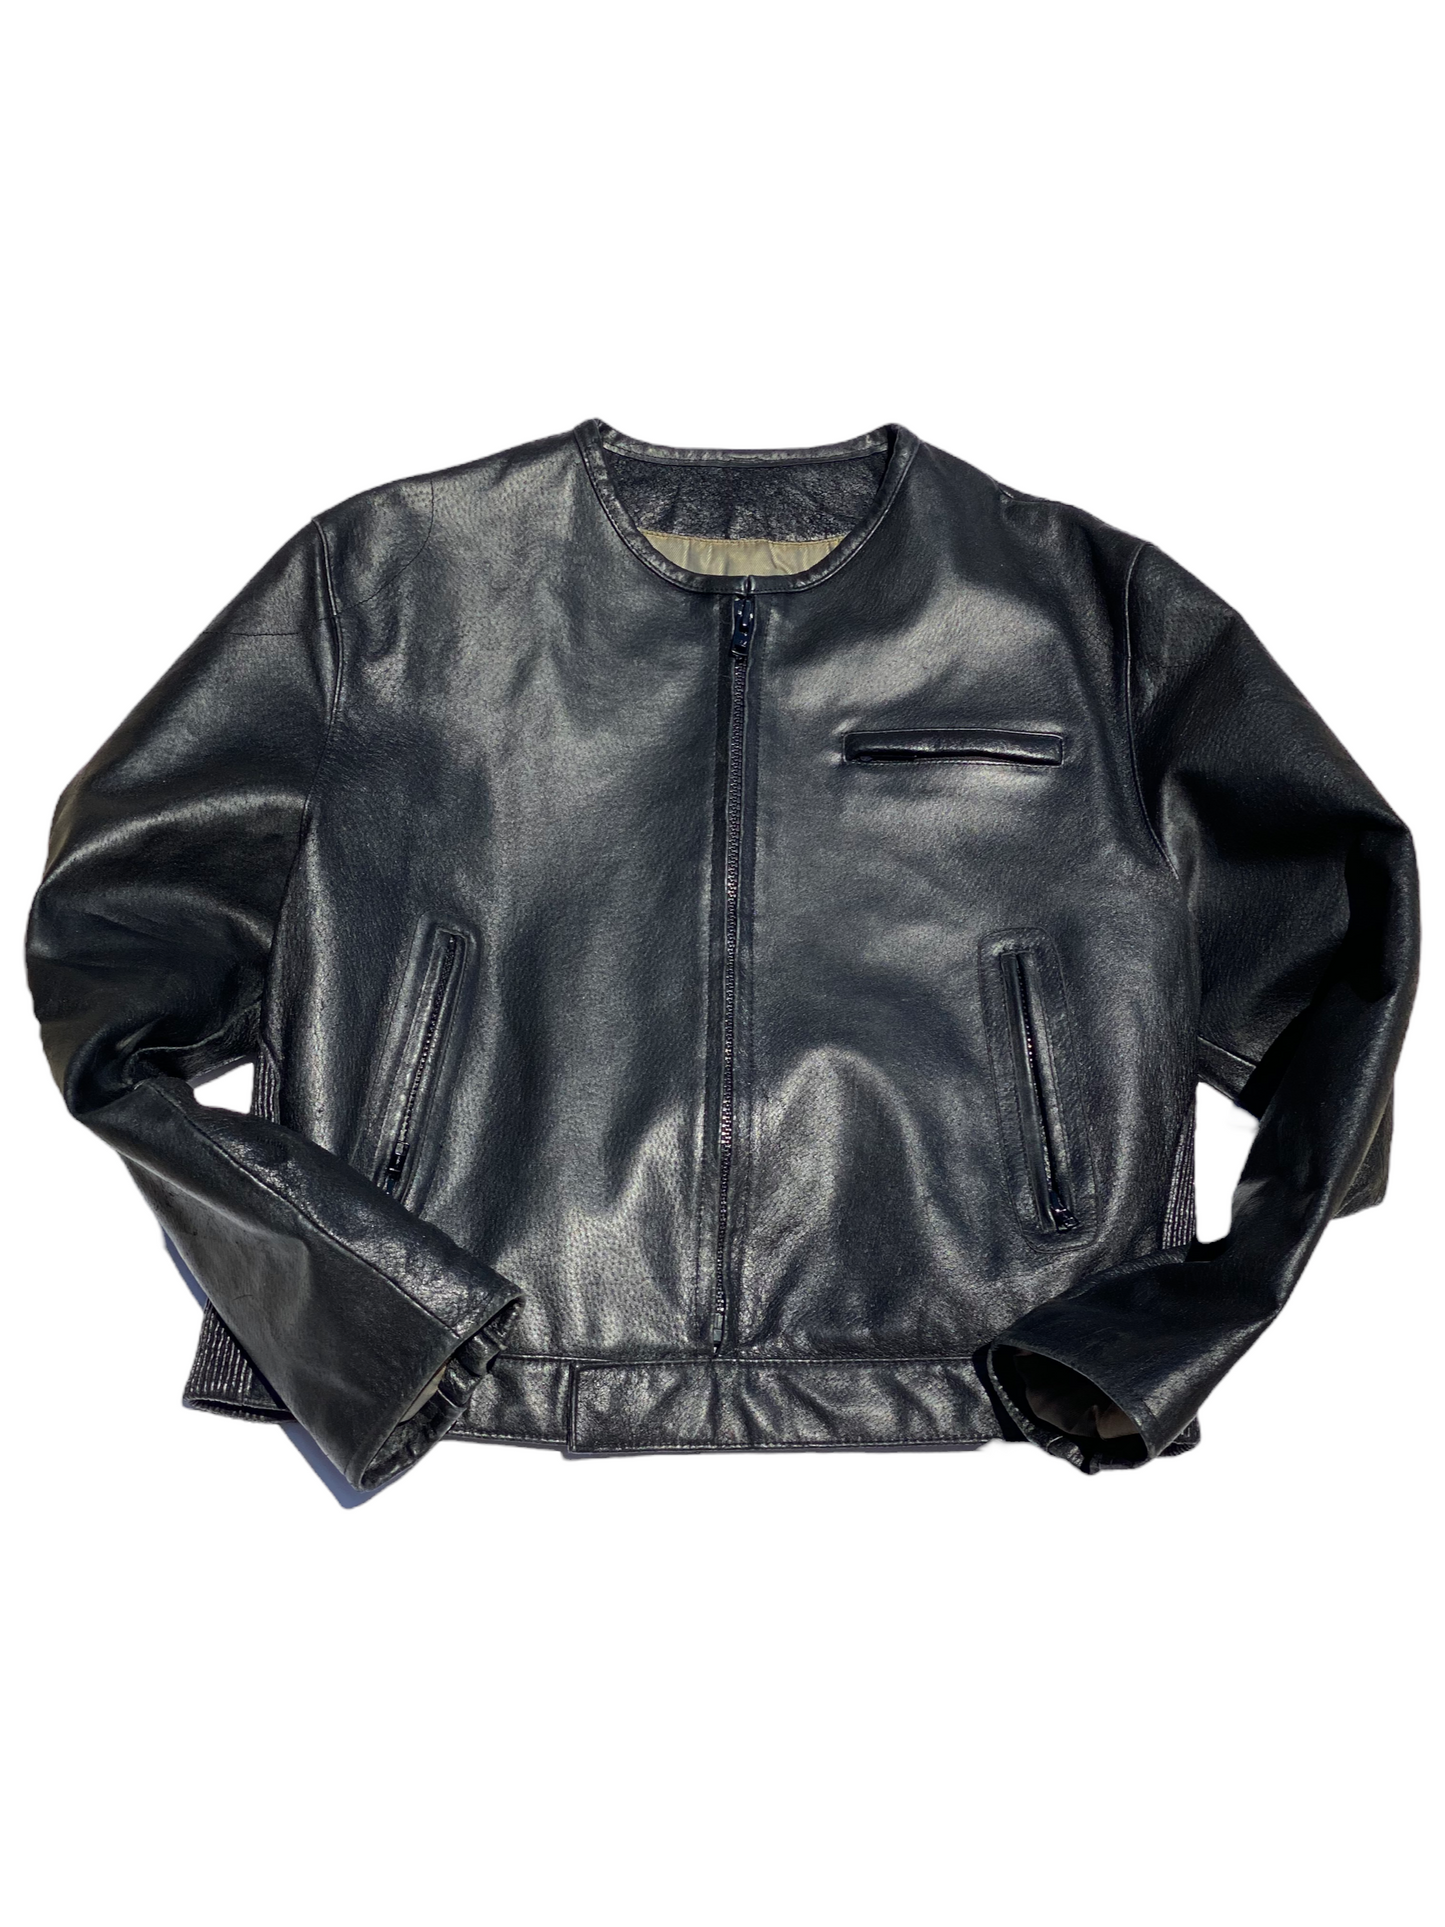 Black Leather vintage jacket